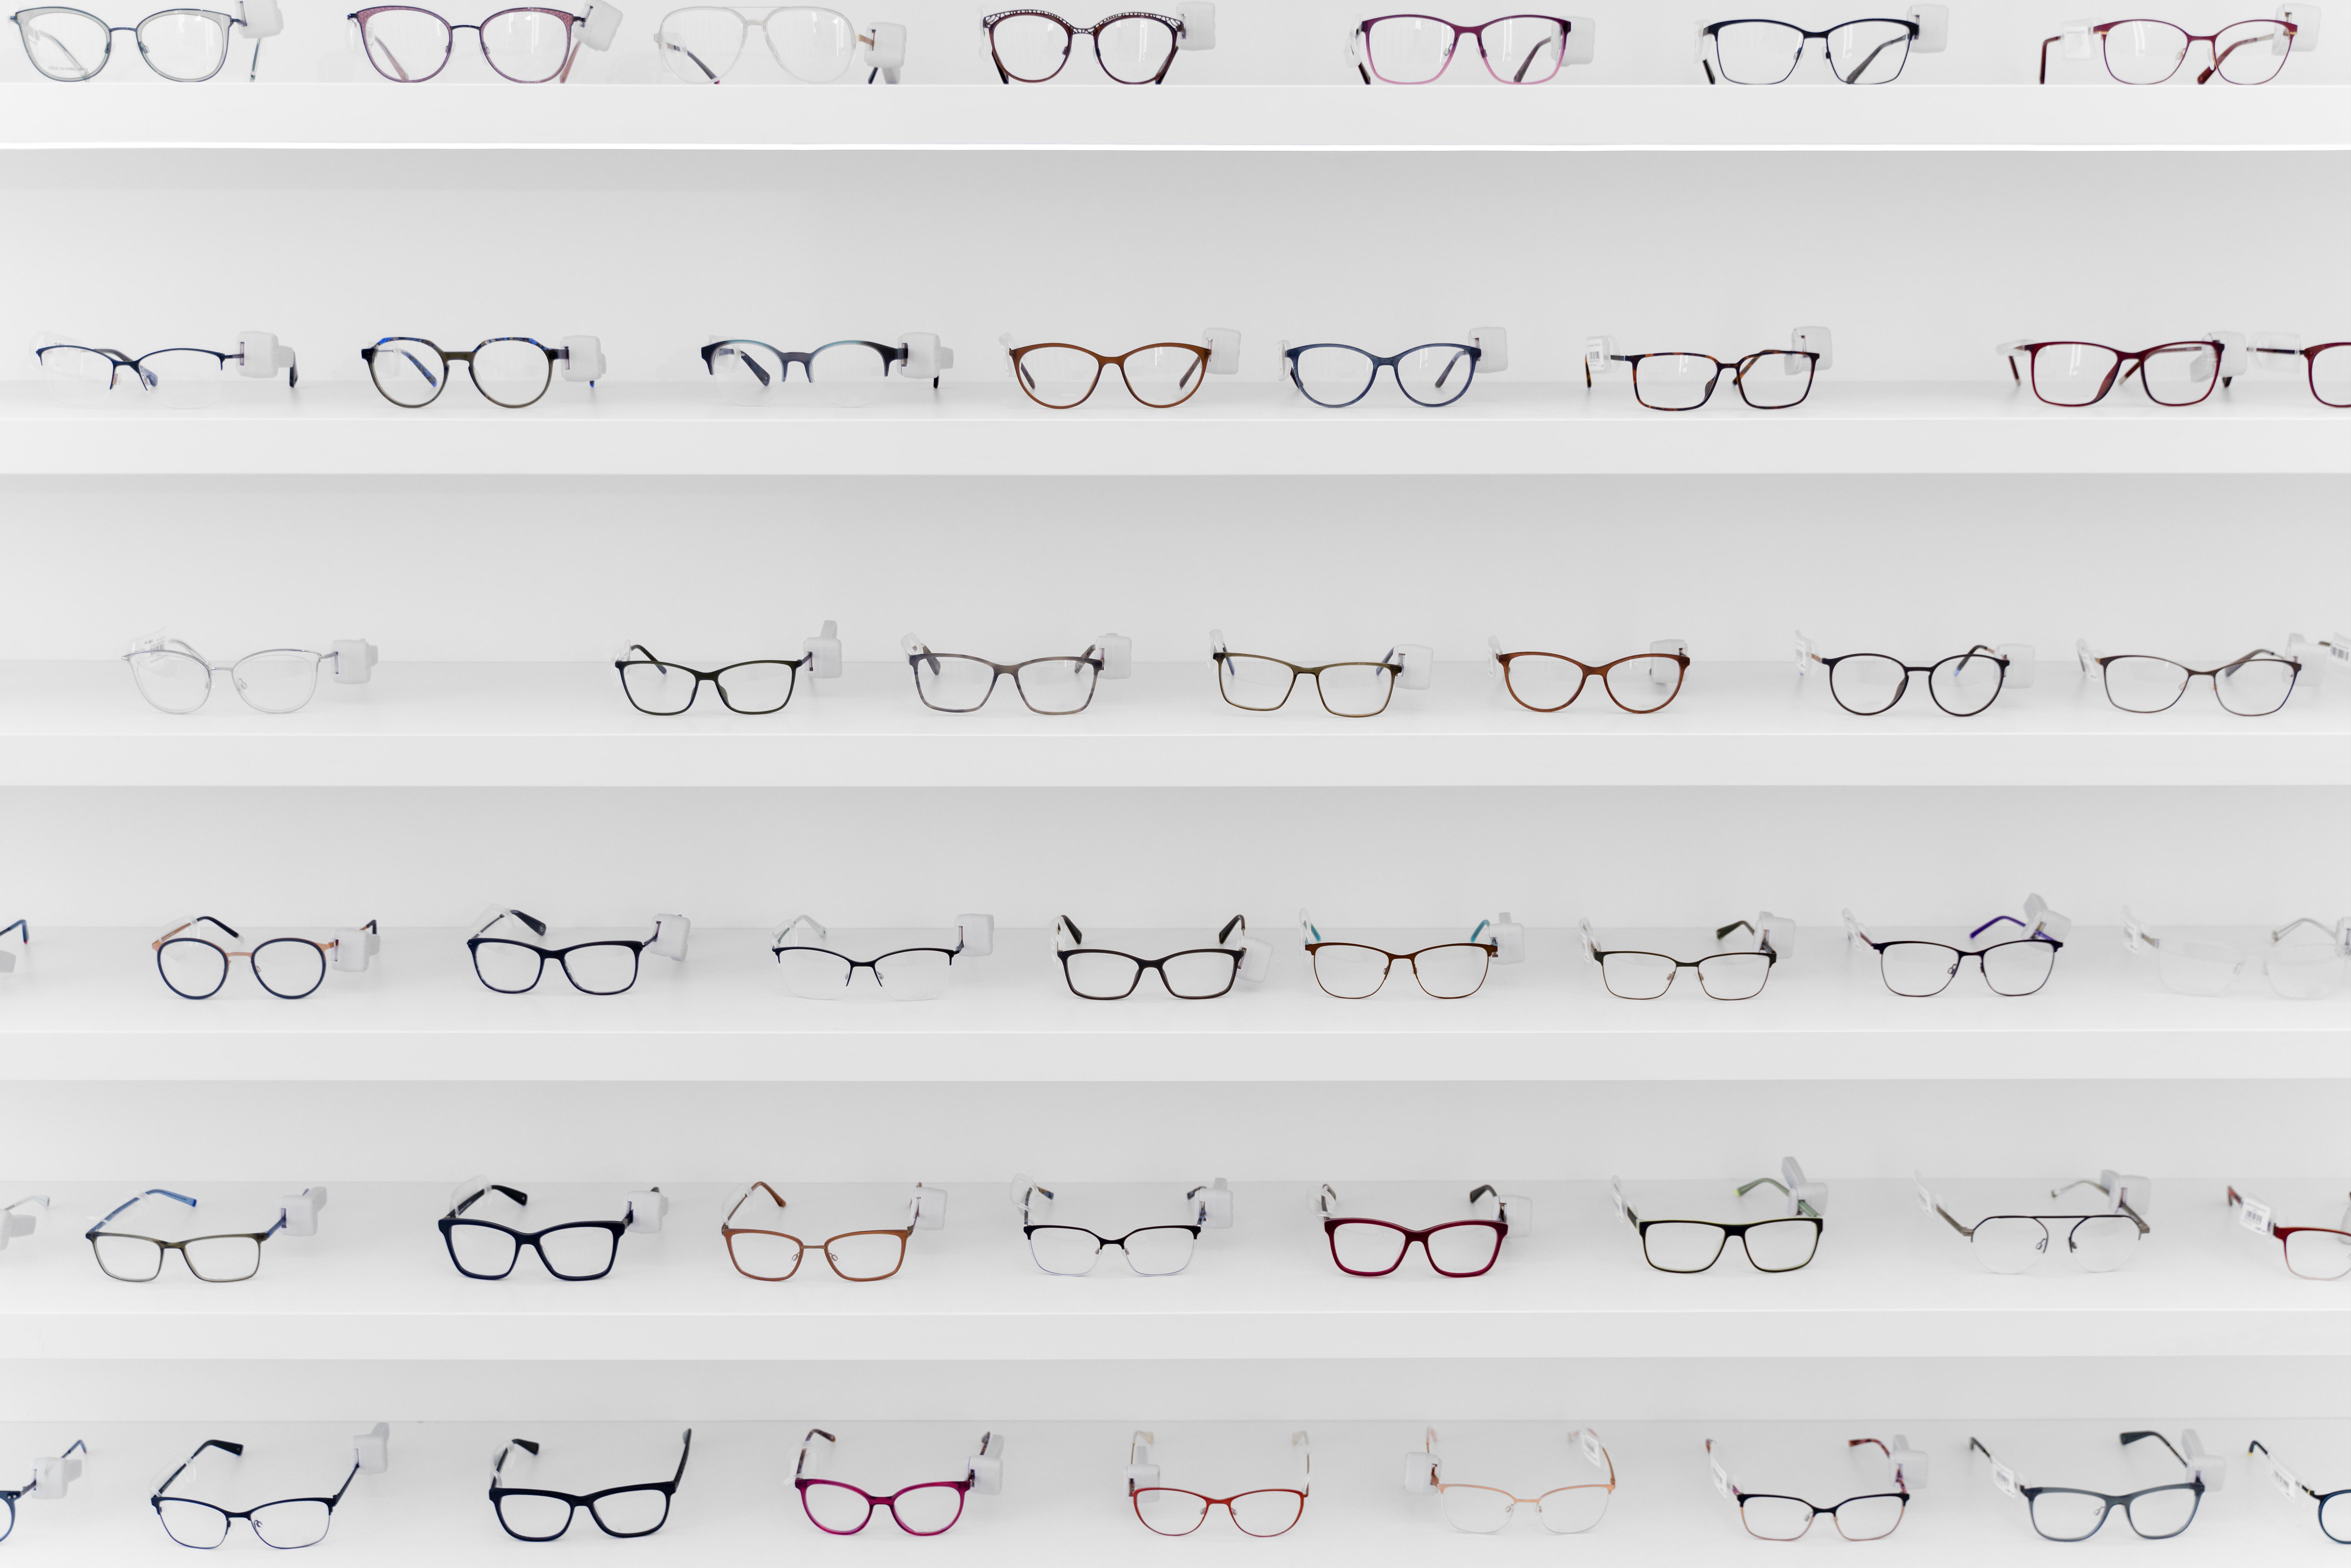 arrangement-different-glasses-shelves